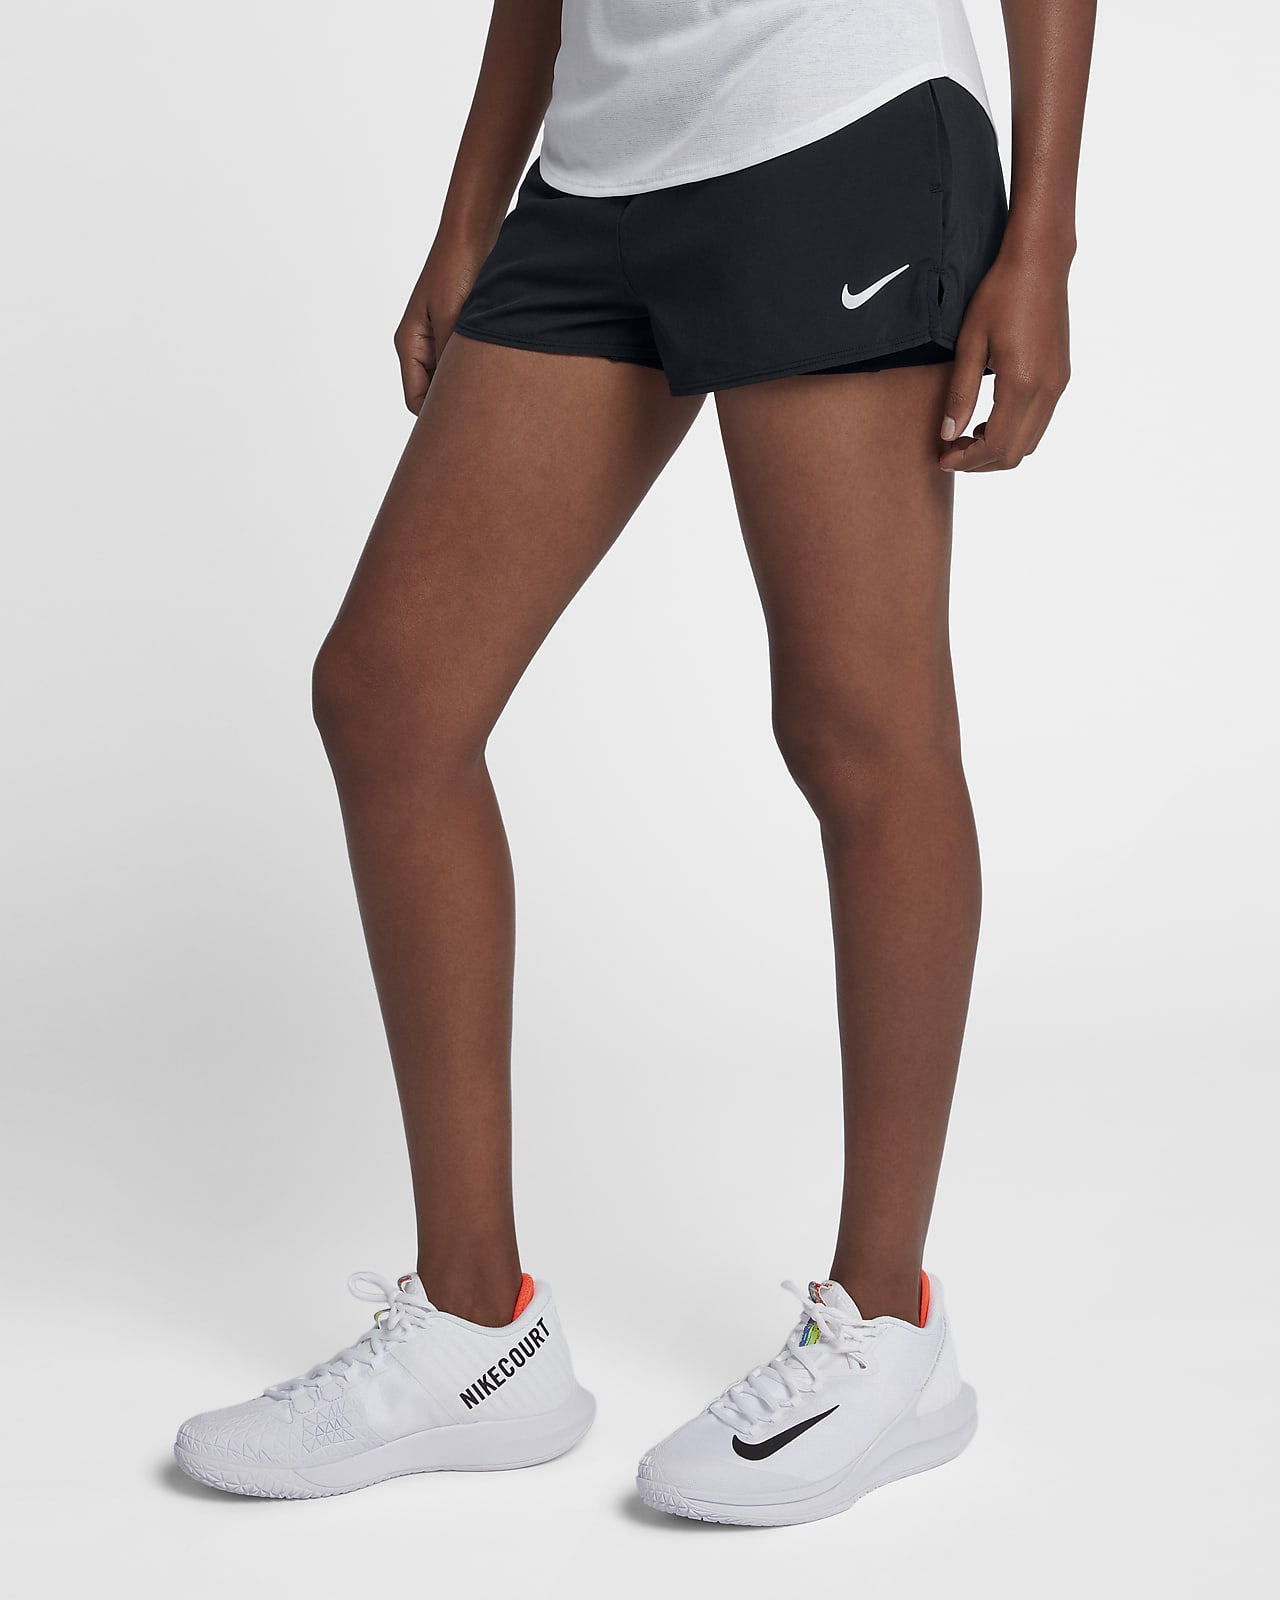 NikeCourt Flex 女子网球短裤